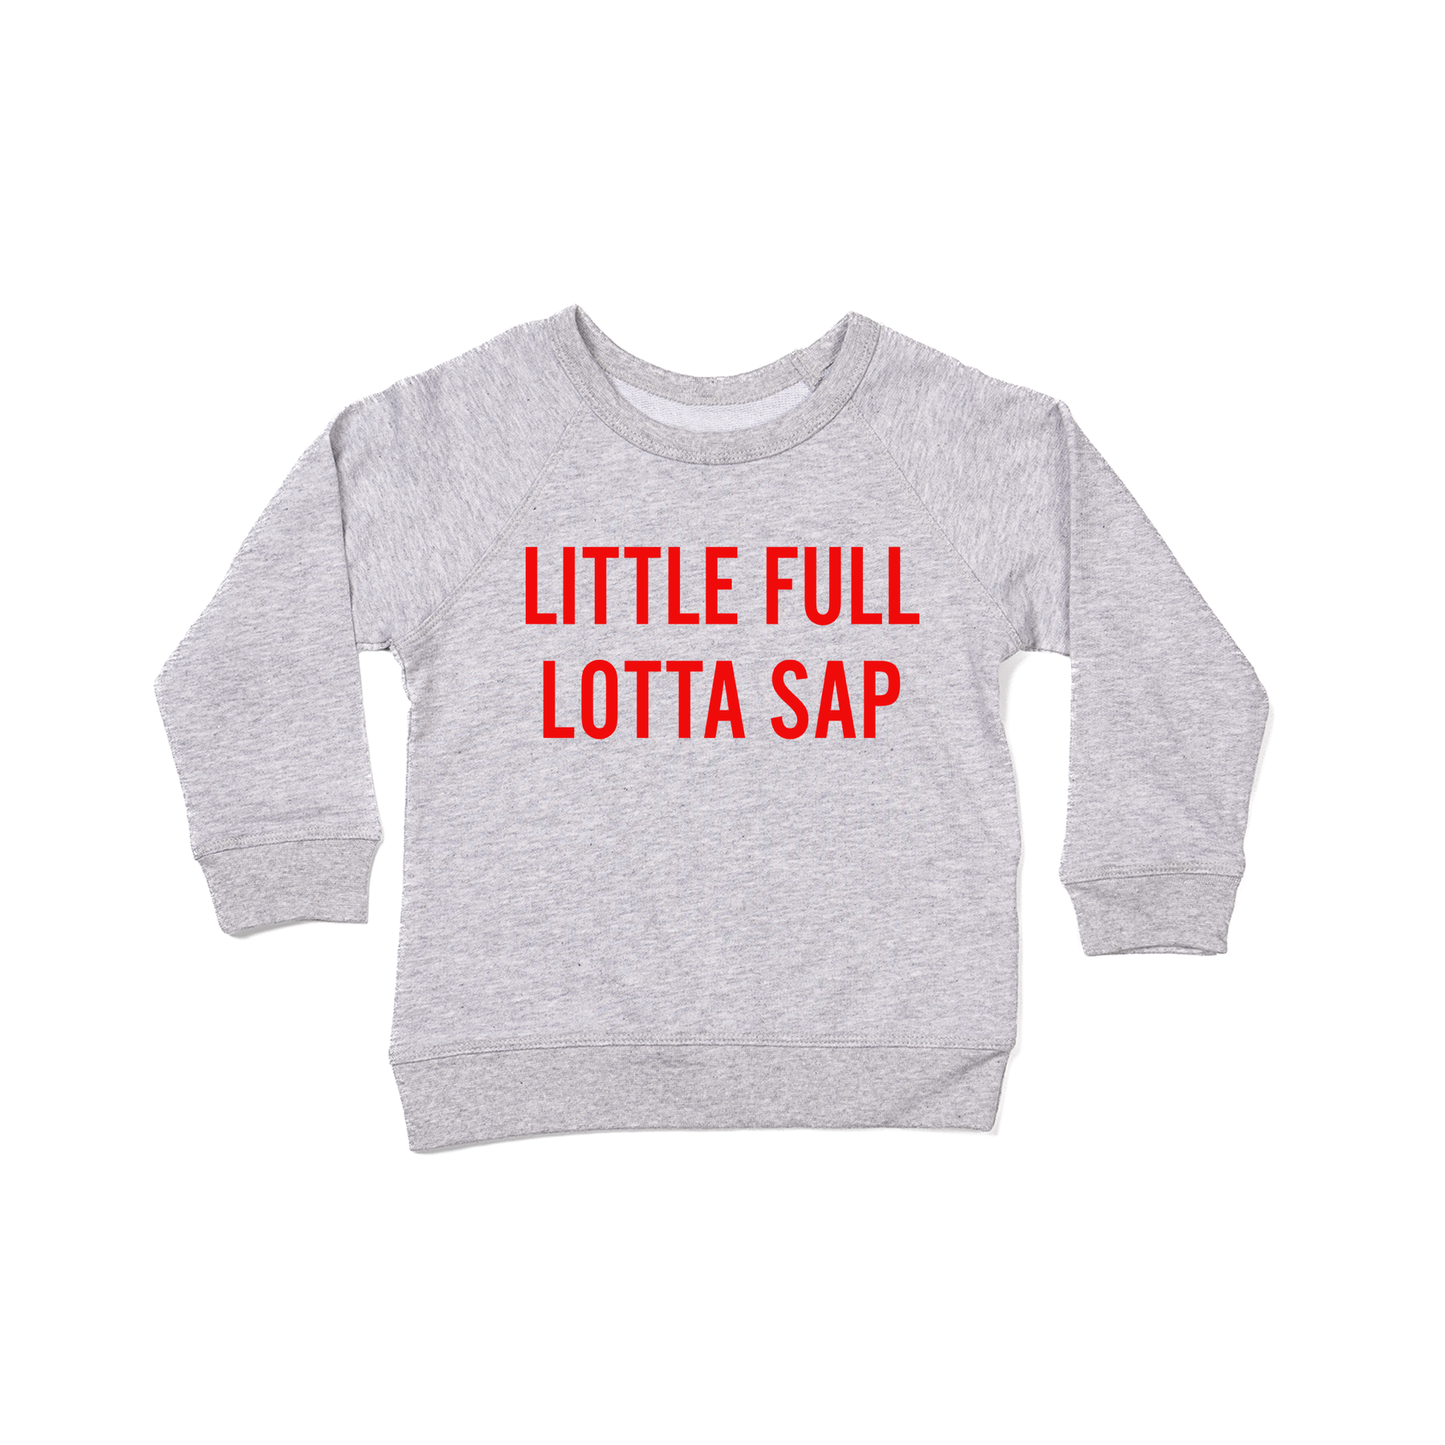 Little Full Lotta Sap (Red) - Kids Sweatshirt (Heather Gray)